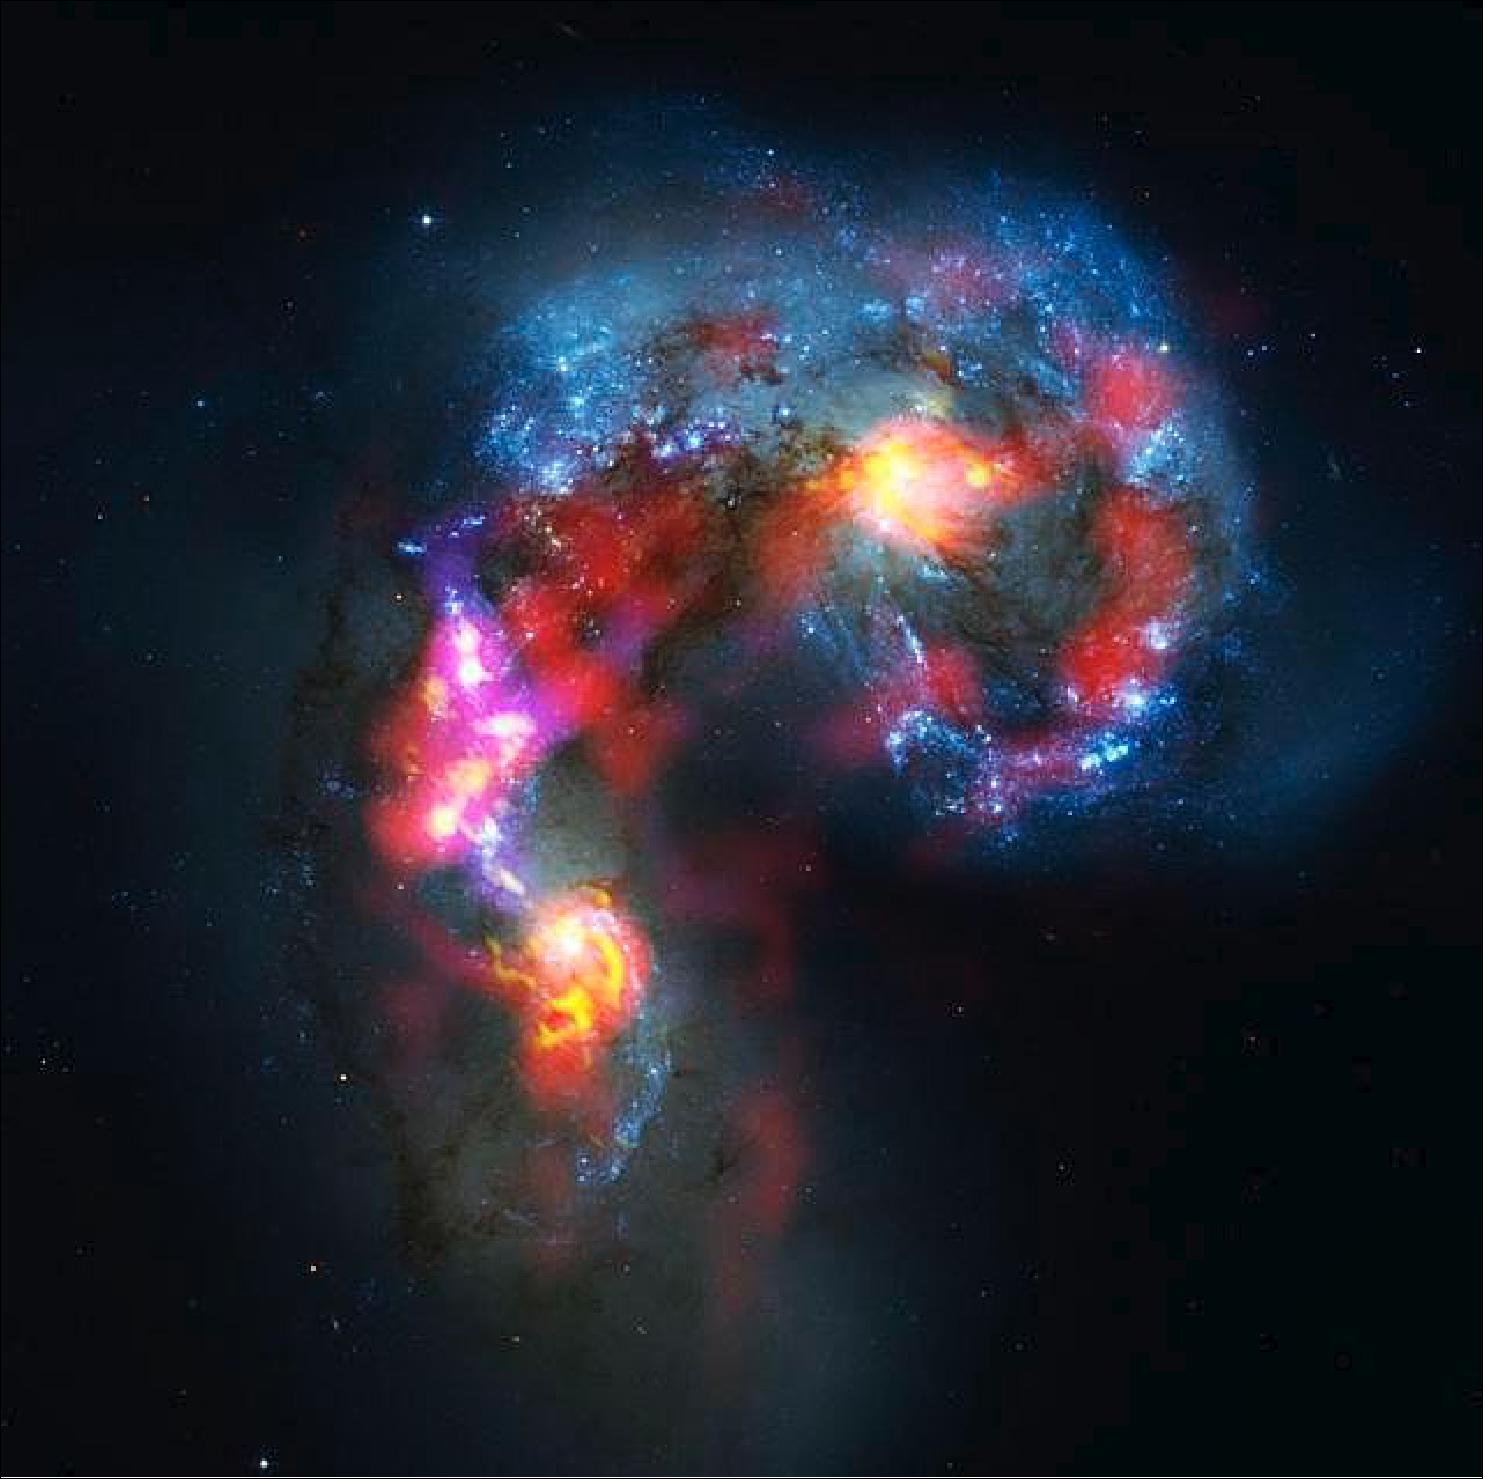 Figure 63: Antennae Galaxies composite of ALMA and Hubble observations (image credit: ALMA (ESO/NAOJ/NRAO); visible light image: the NASA/ESA Hubble Space Telescope)